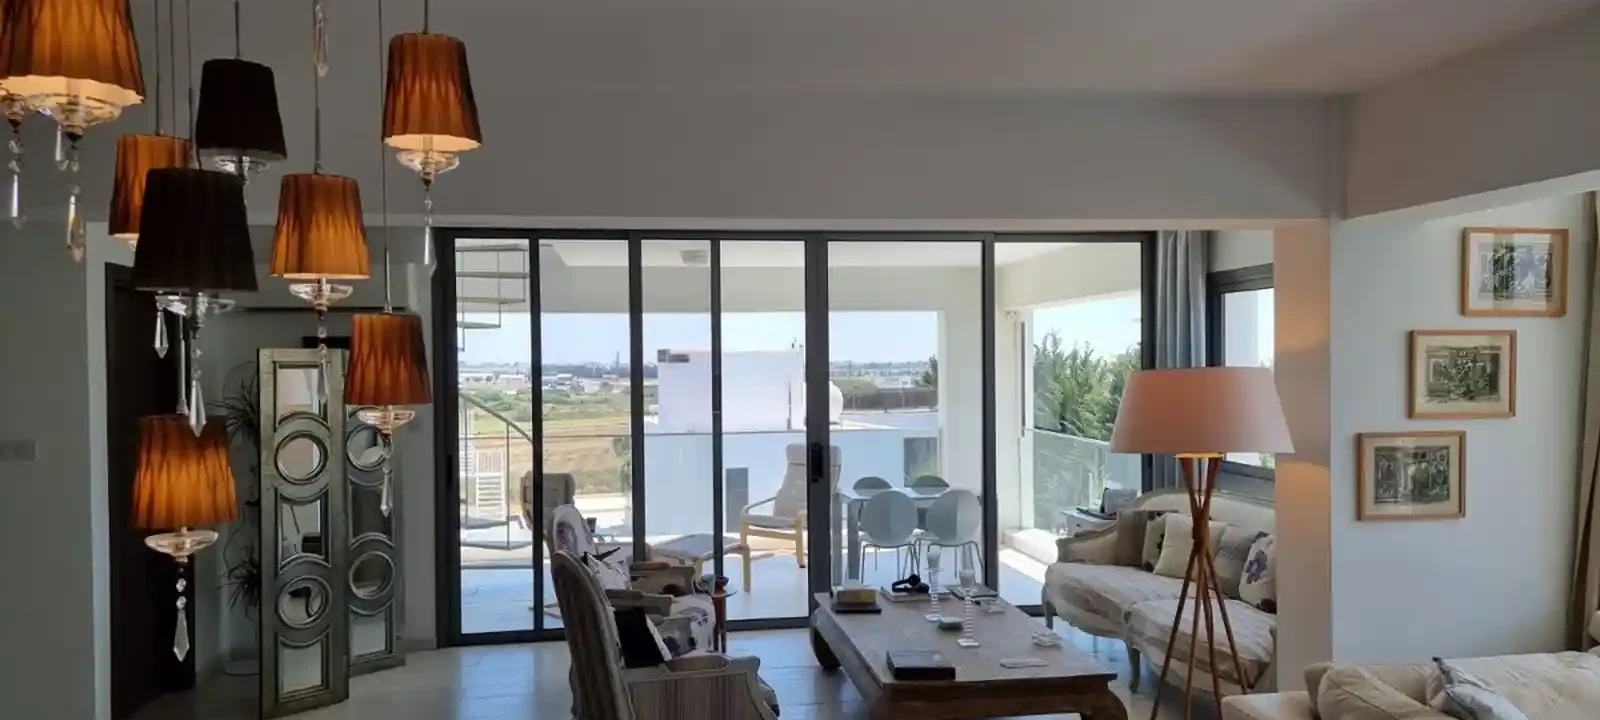 5-bedroom penthouse fоr sаle €900.000, image 1